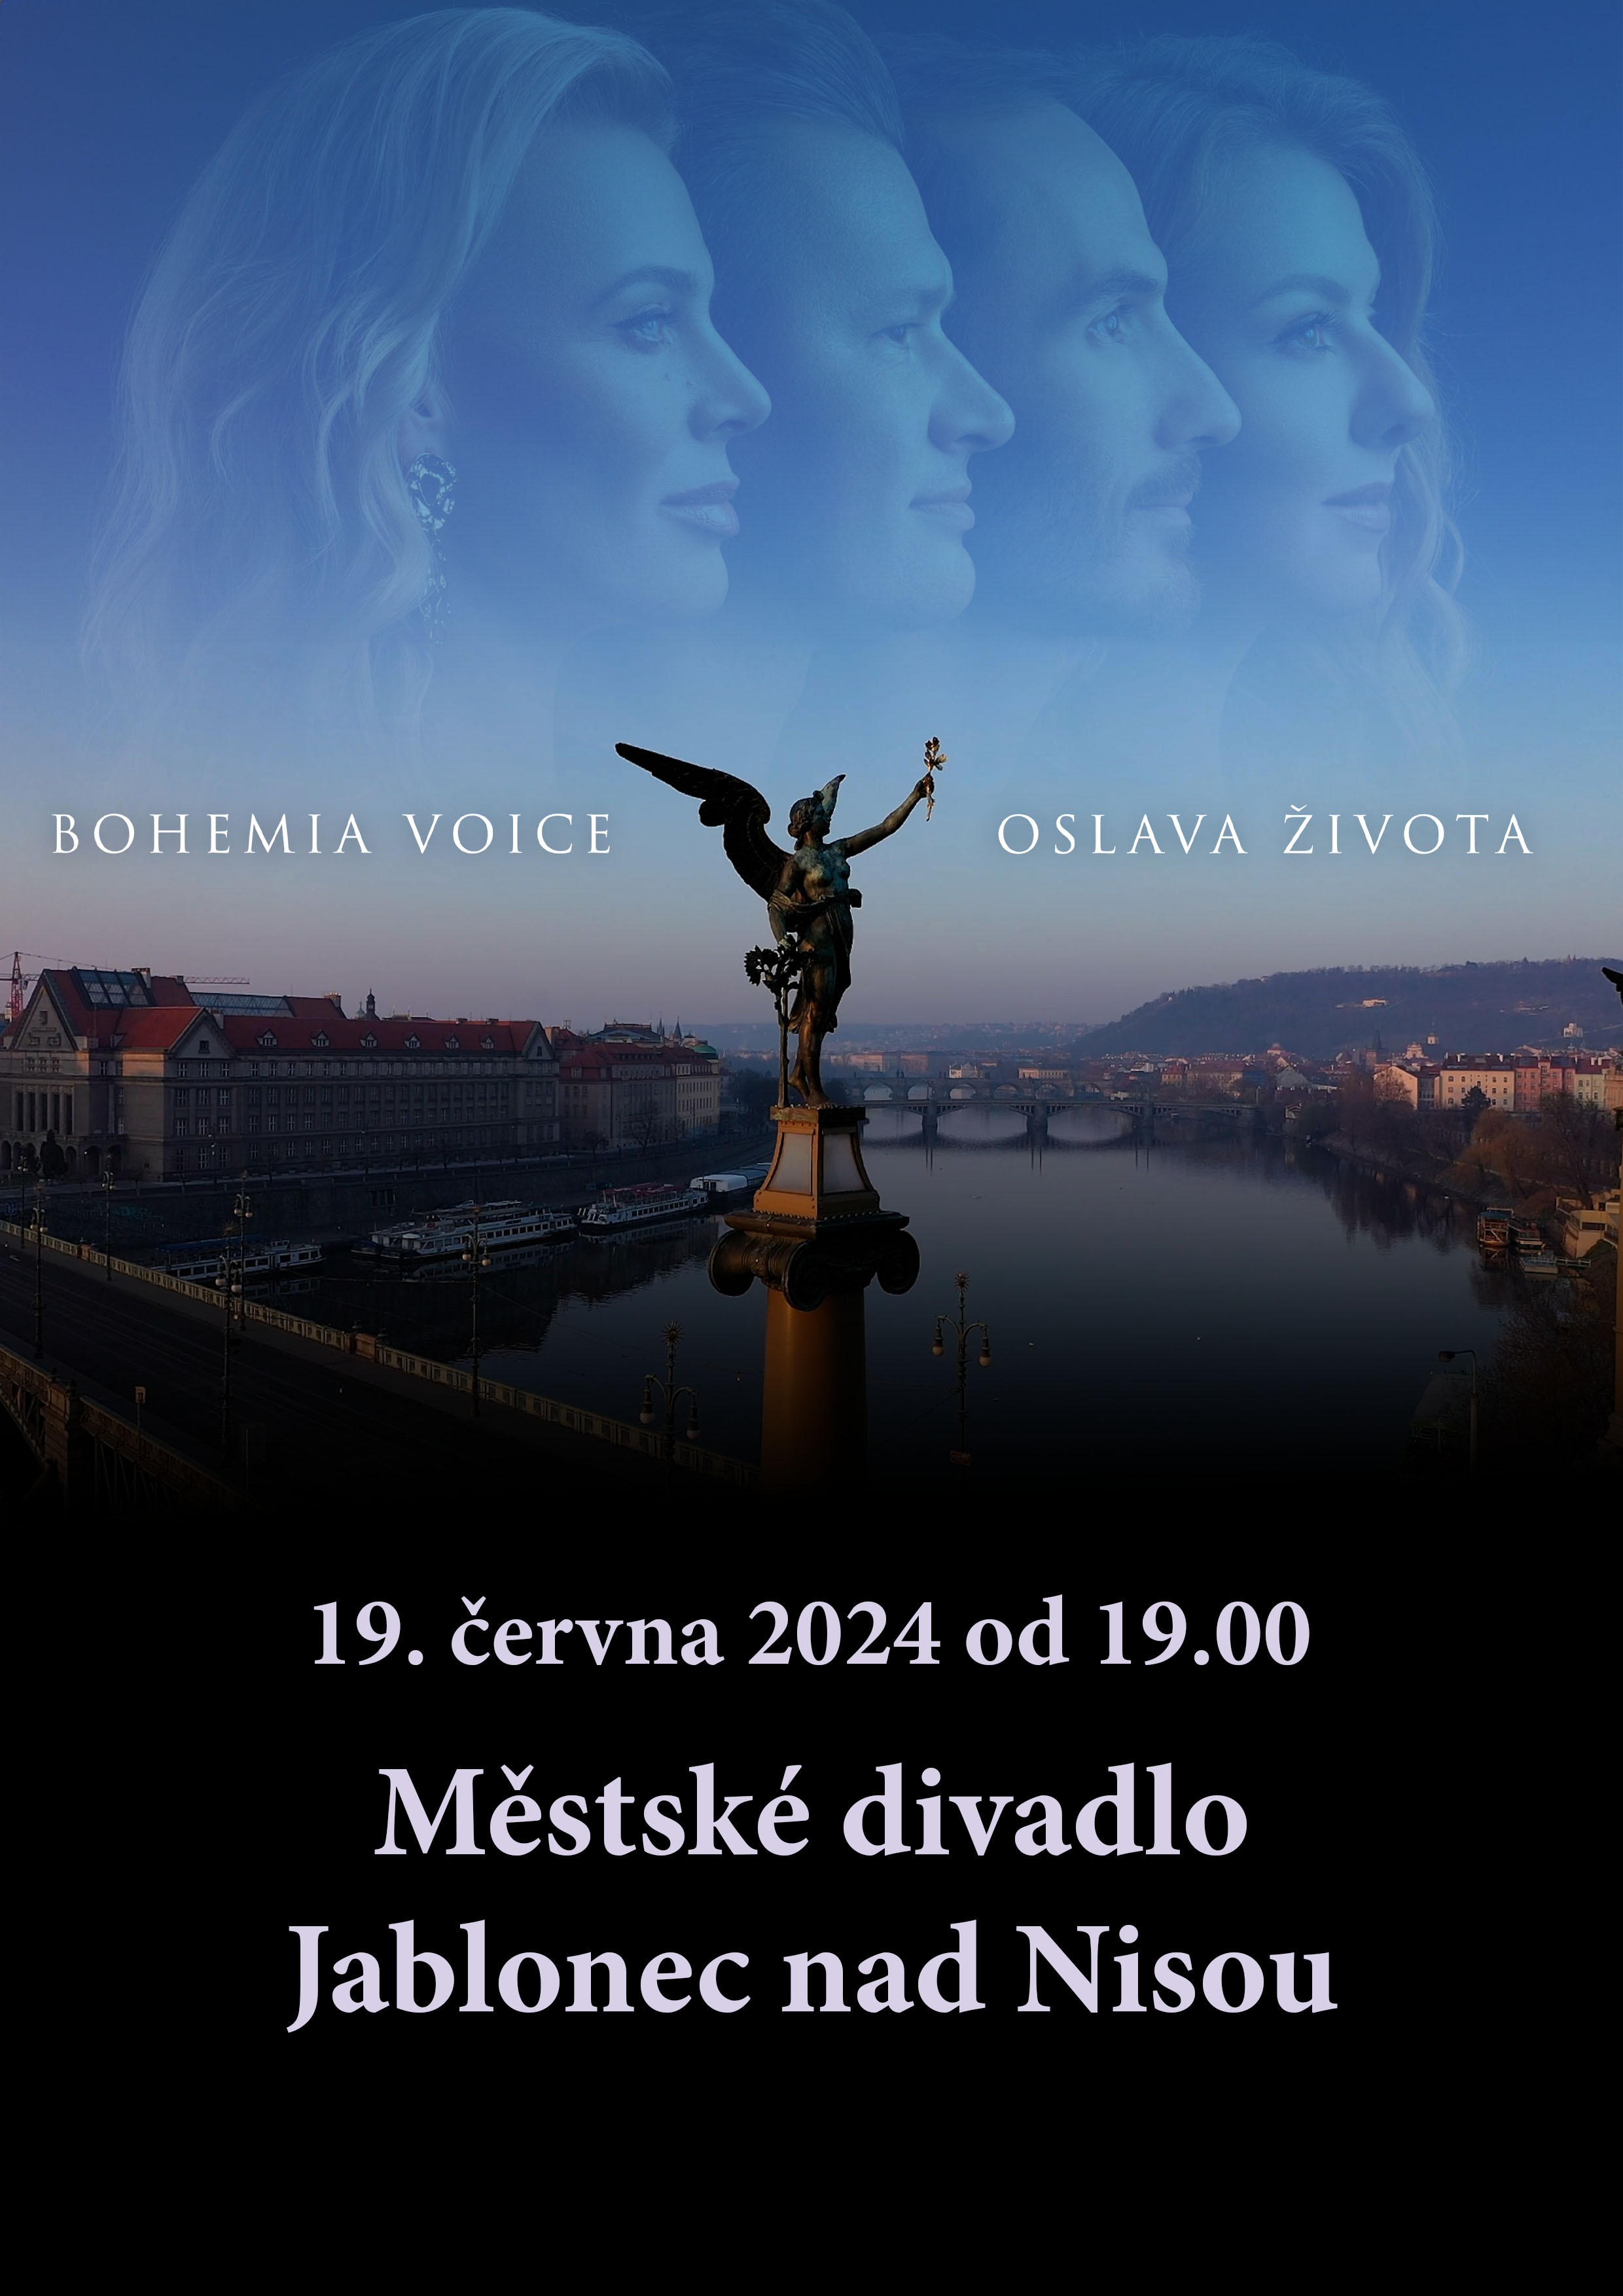 Bohemia-voice-plakat.jpg (589 KB)